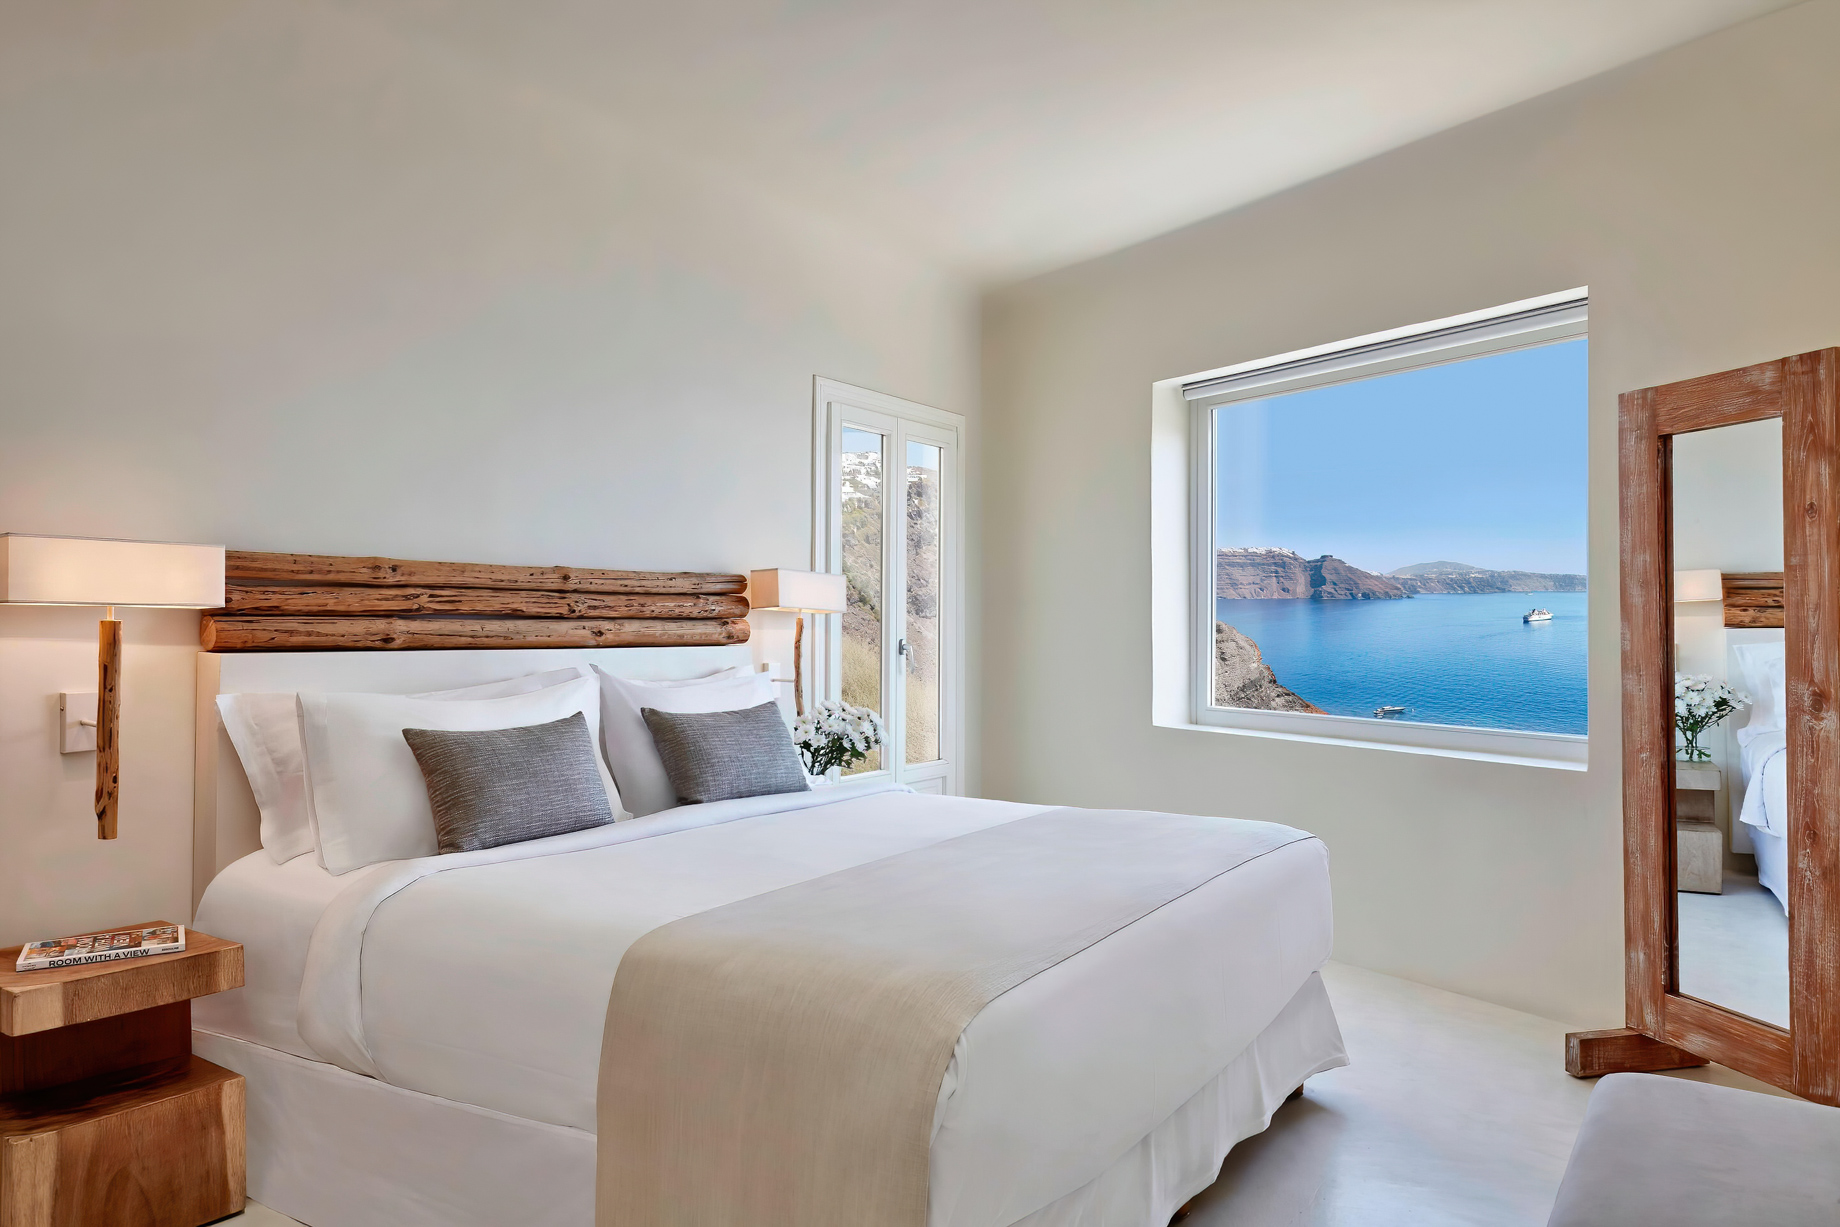 Mystique Hotel Santorini – Oia, Santorini Island, Greece – Mystery Villa Bedroom